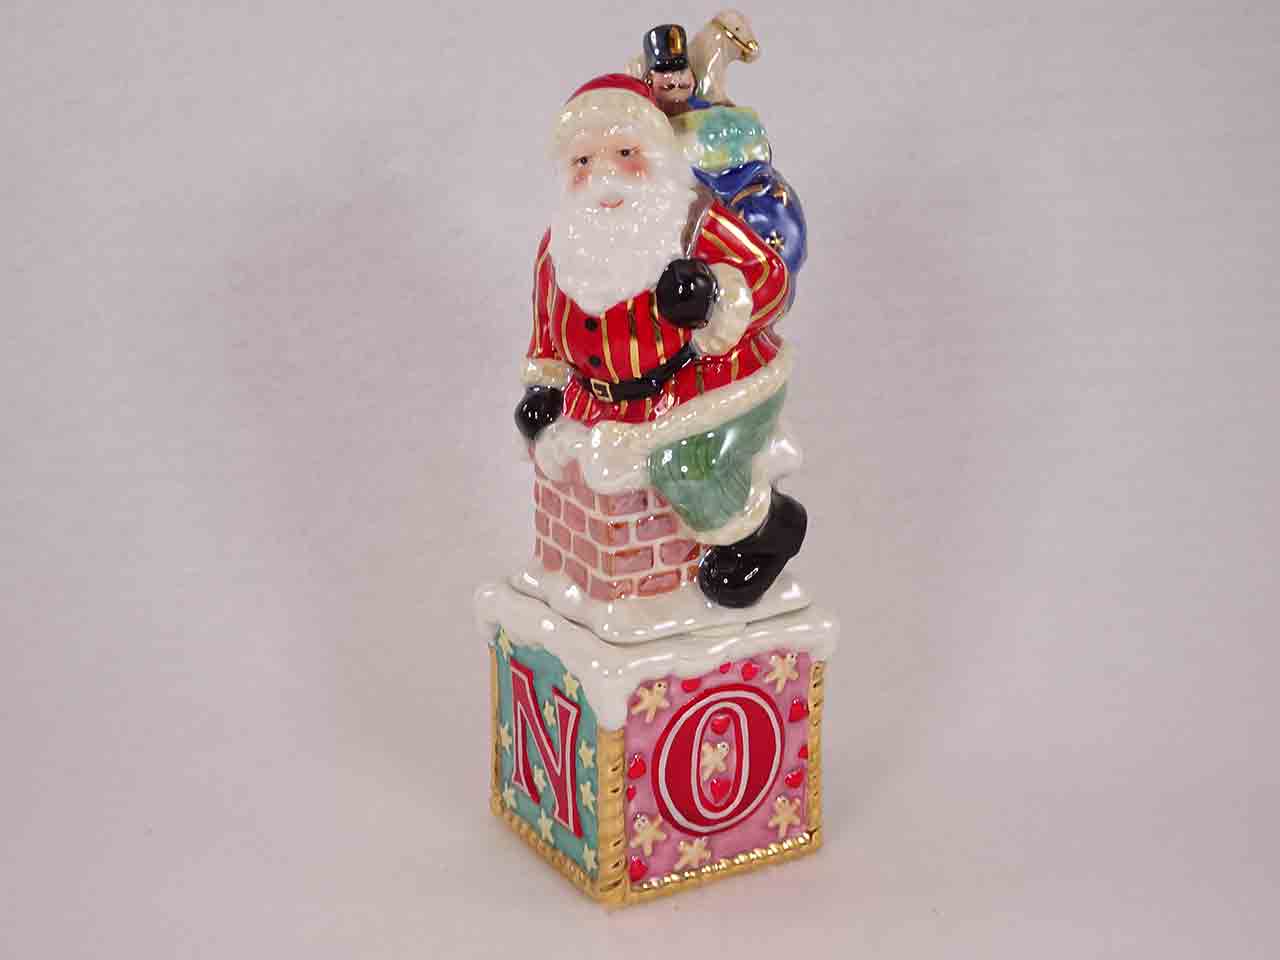 Christopher Radko Christmas sets on toy blocks salt and pepper shakers - Santa Claus